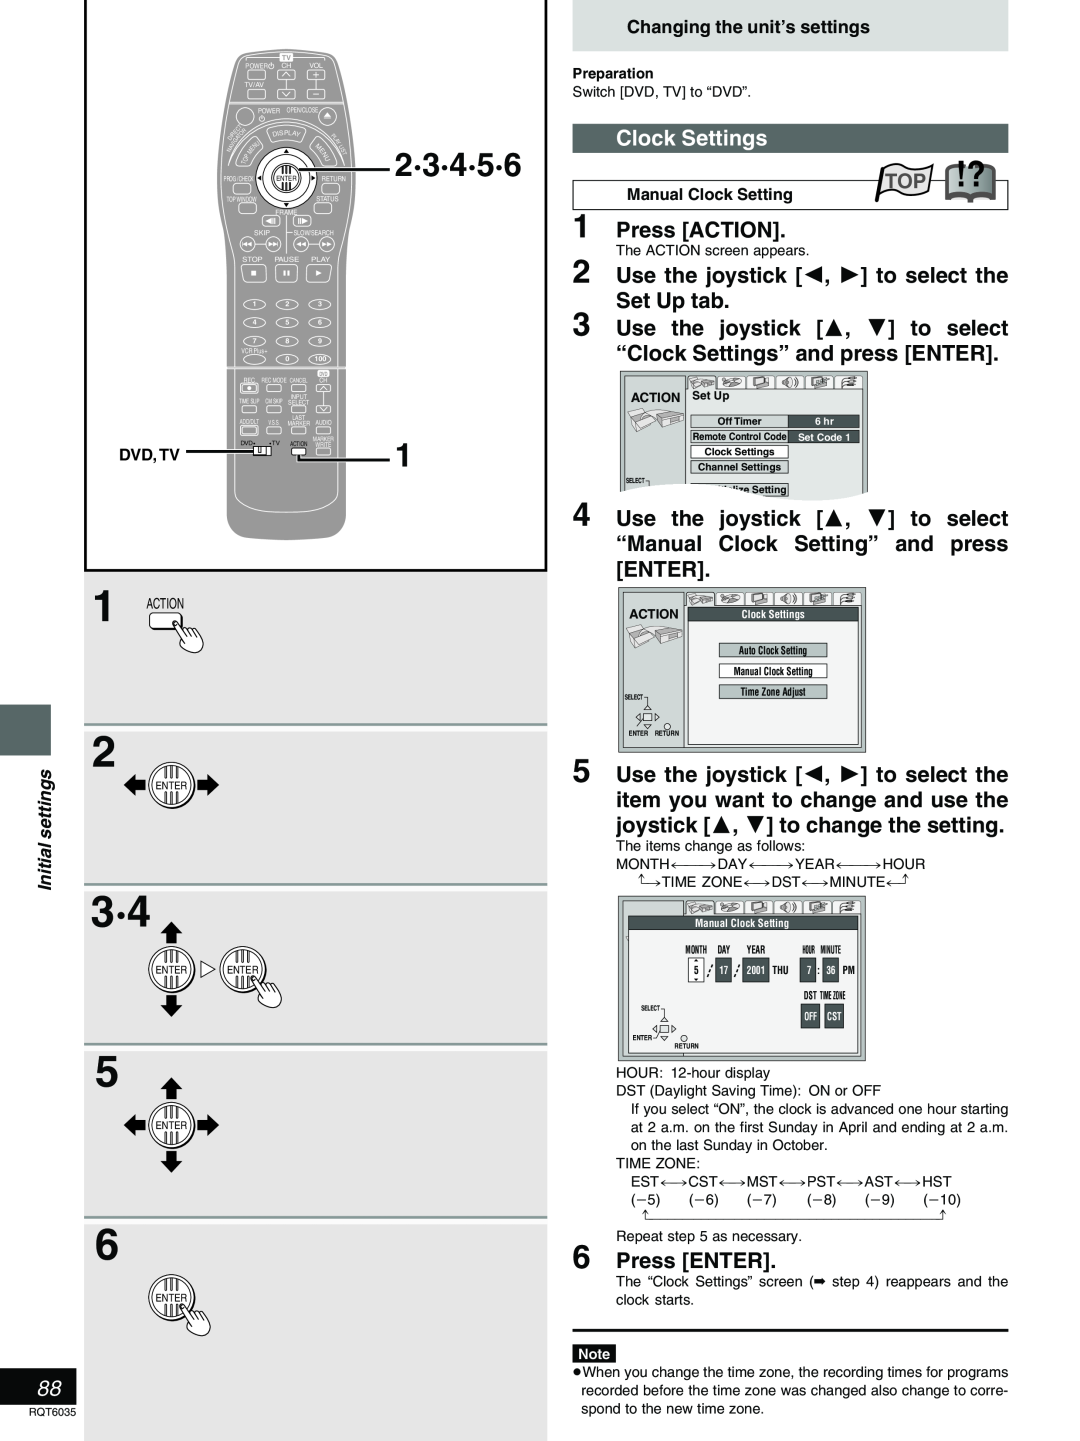 Panasonic DMR-E20 2·3·4·5·6, Set Up tab, Use the joystick 3, 4 to select “Clock Settings” and press ENTER, Enter, Top !? 